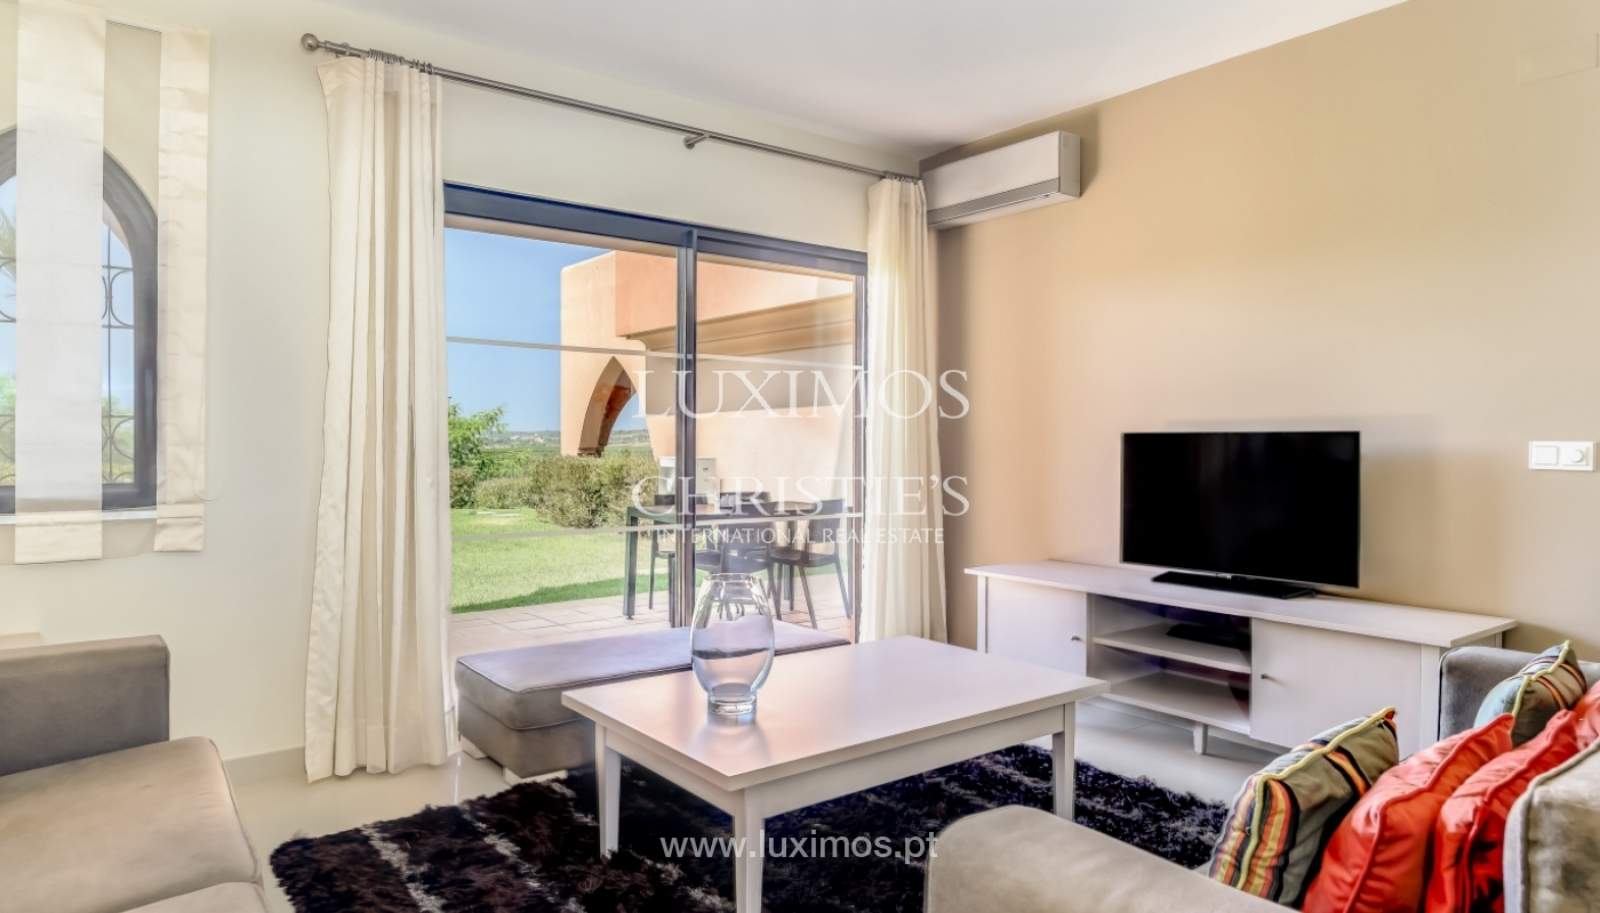 Venda de apartamento contemporâneo em Resort de Golfe exclusivo, Algarve_152570